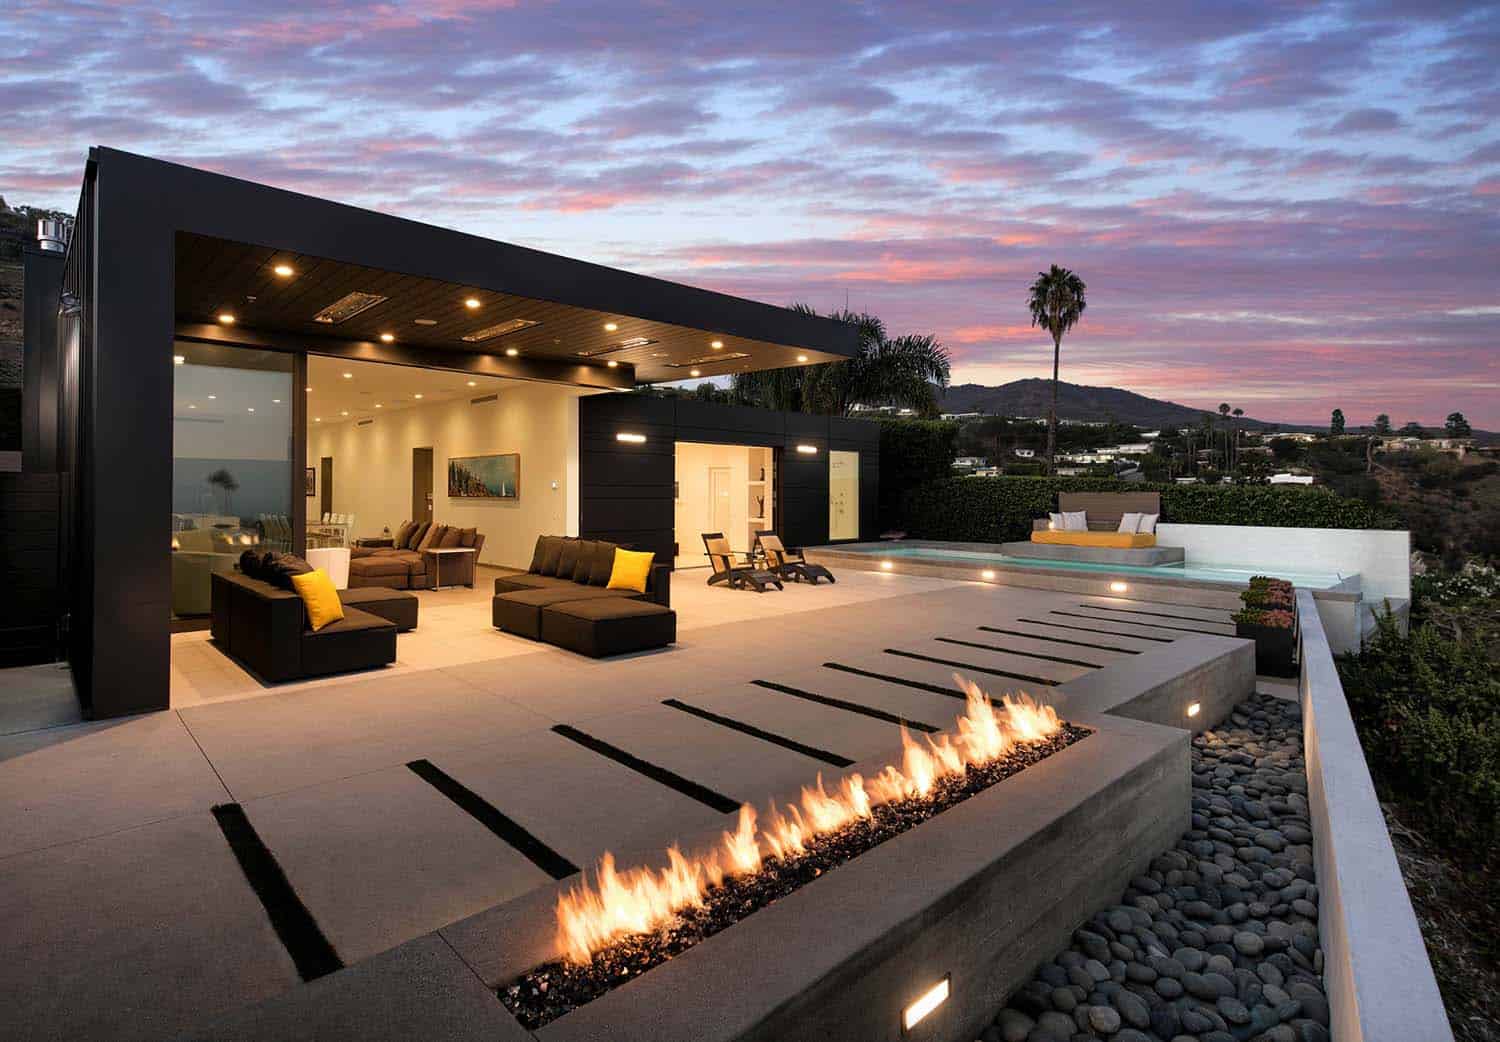 Striking contemporary home overlooking the Santa Monica Bay